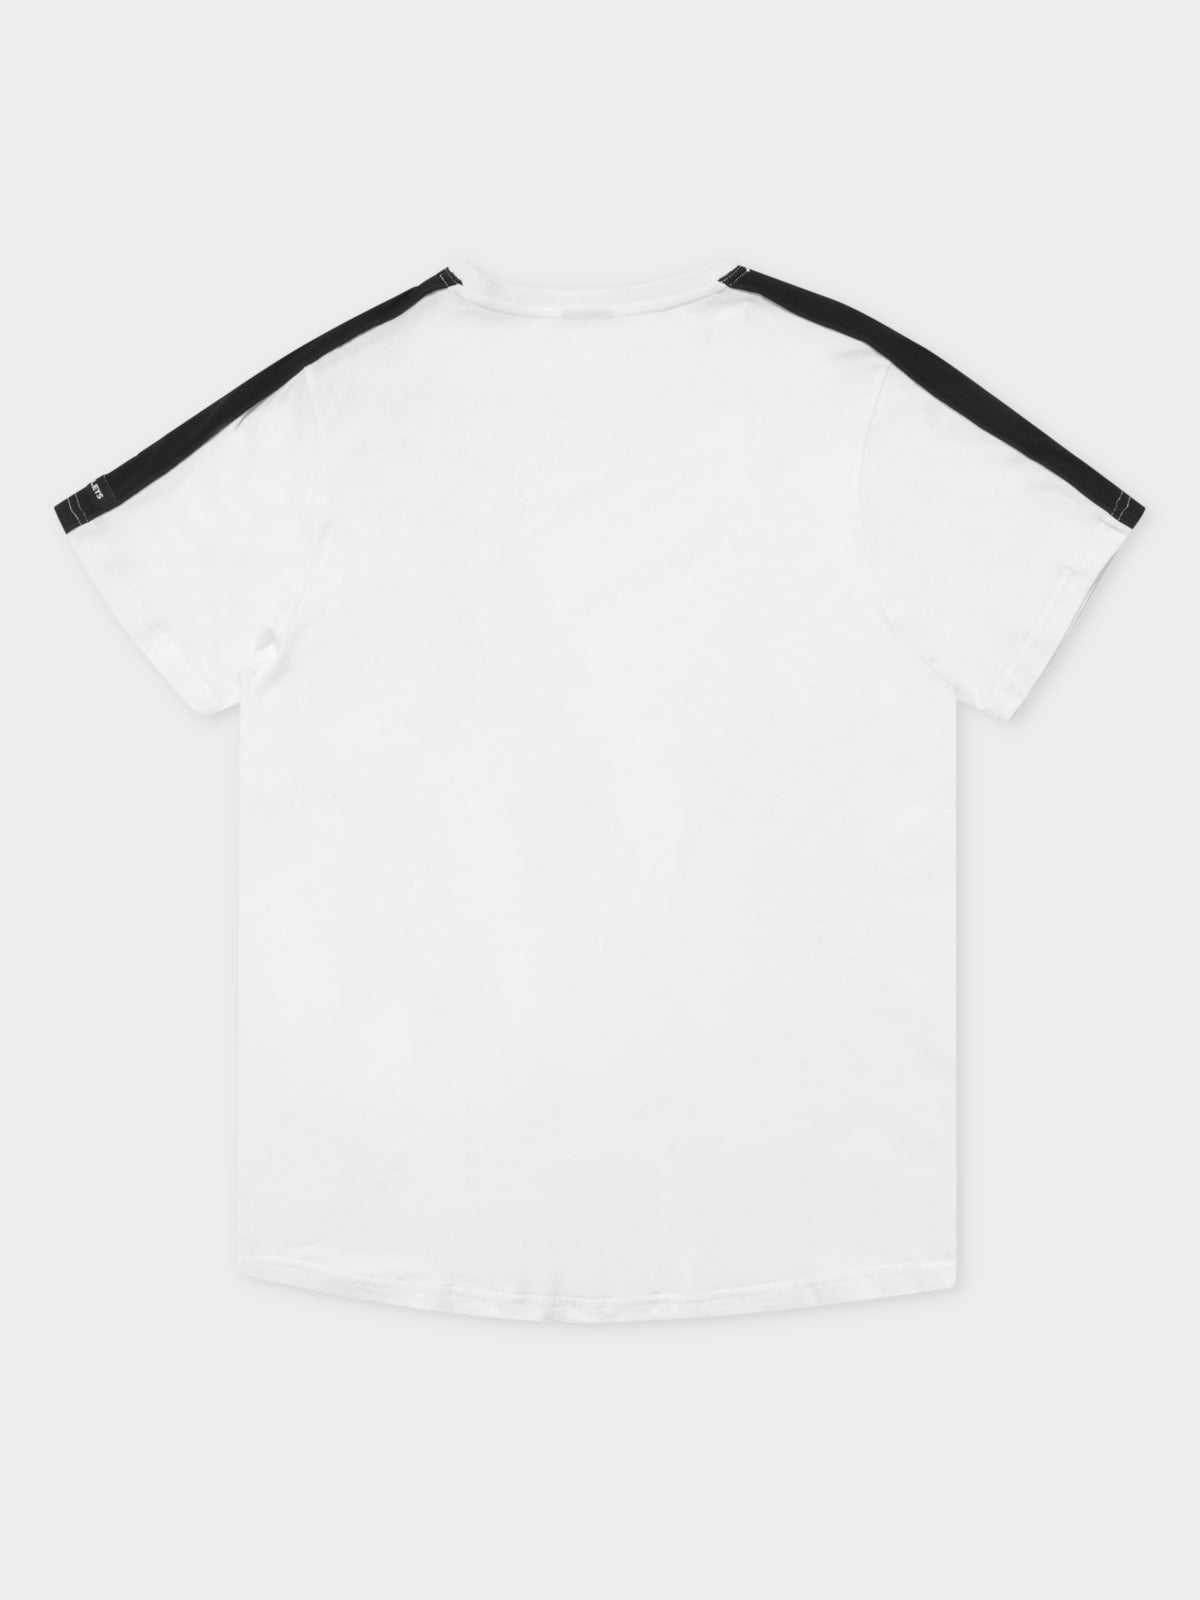 Farrah Loose Fit T-Shirt in White